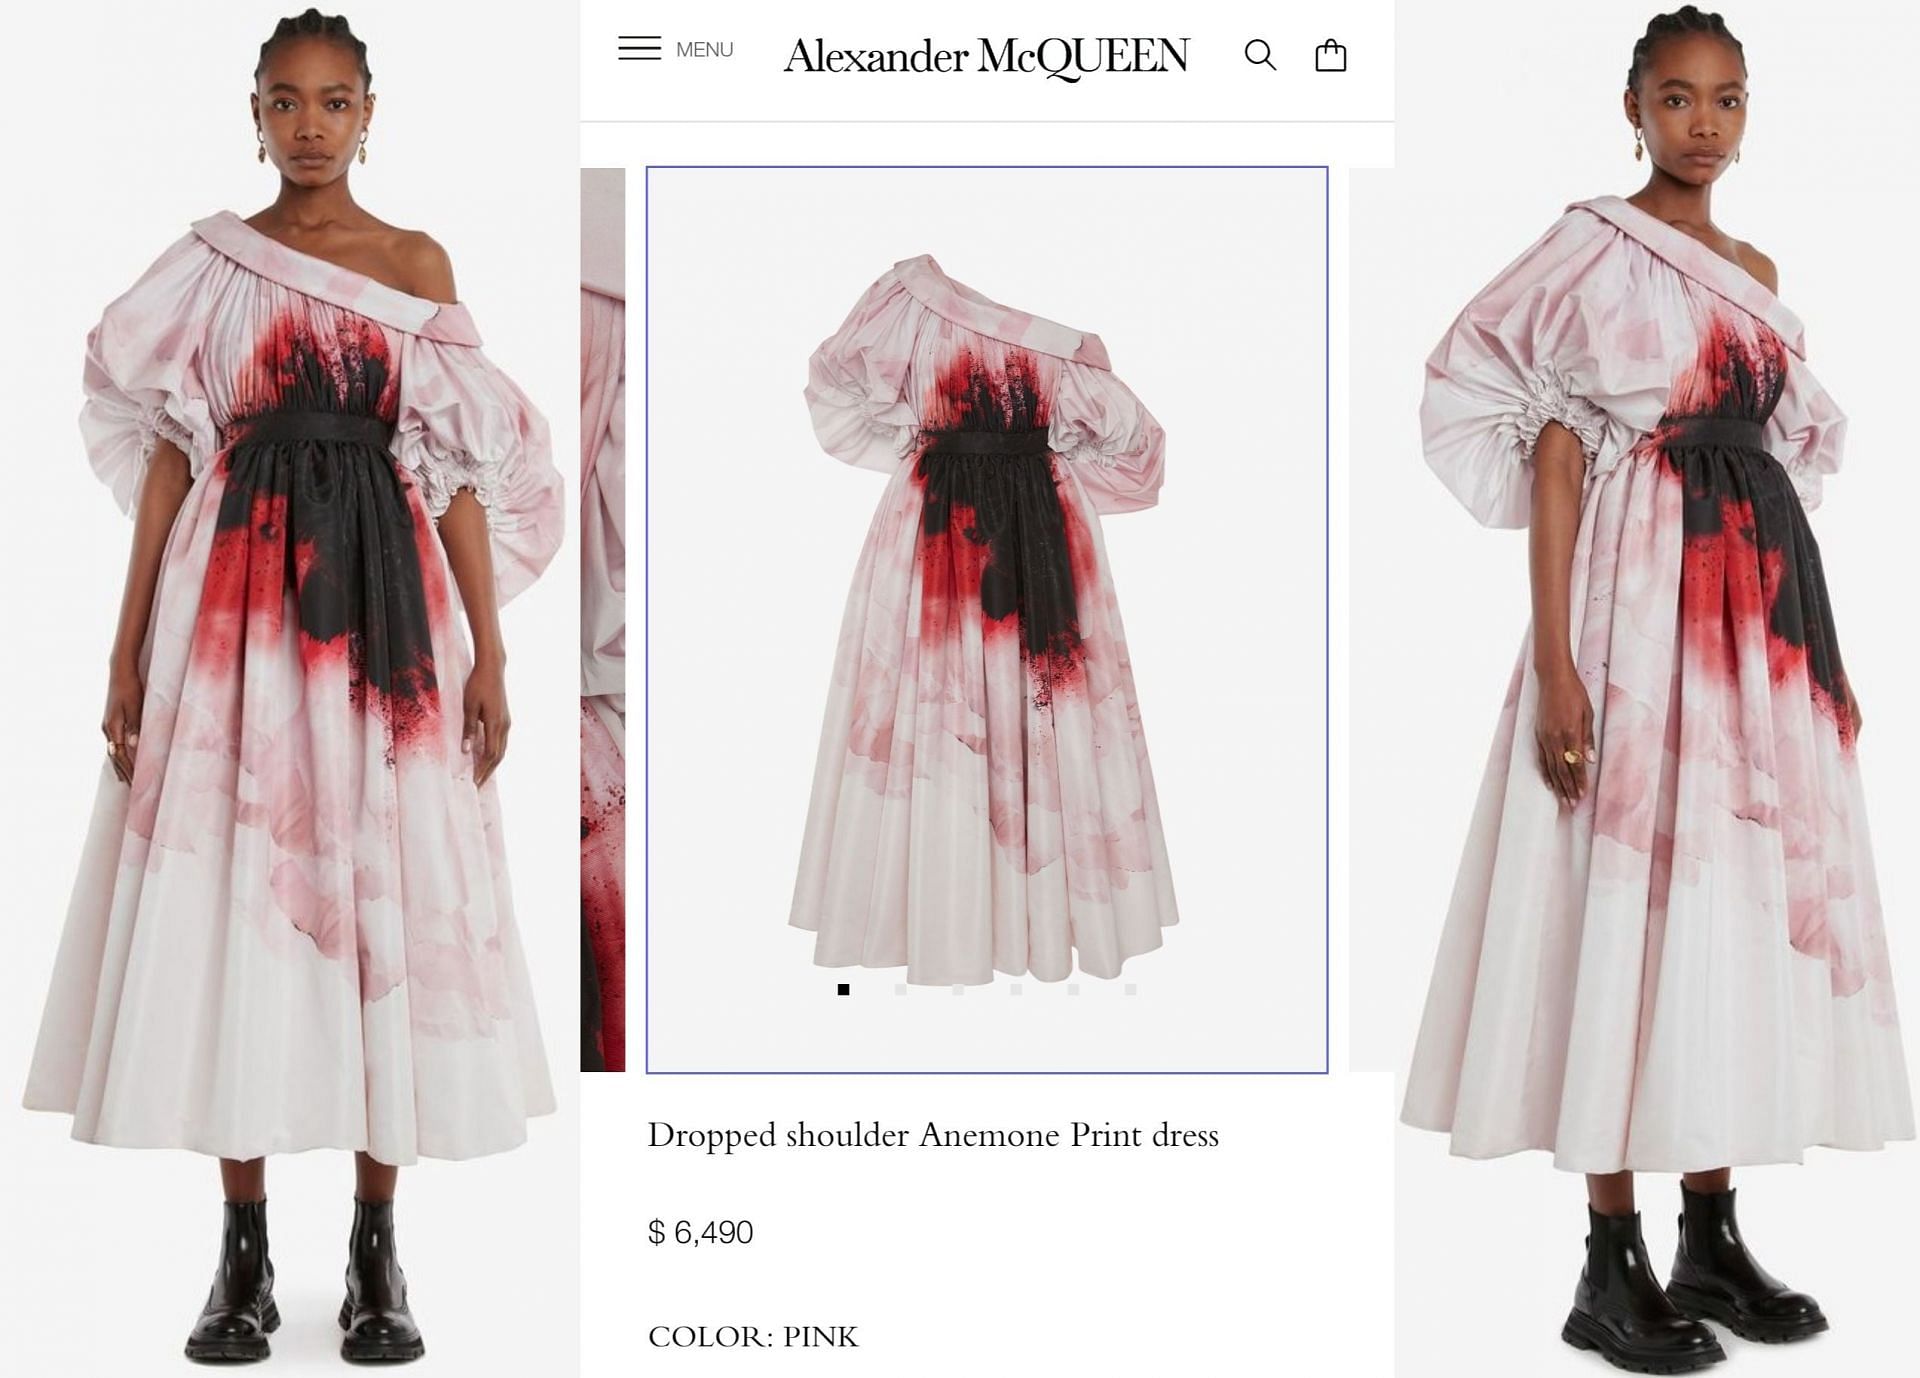 $6490 Anemone dress from Alexander McQueen&#039;s fashion house (Image via Alexander McQueen)